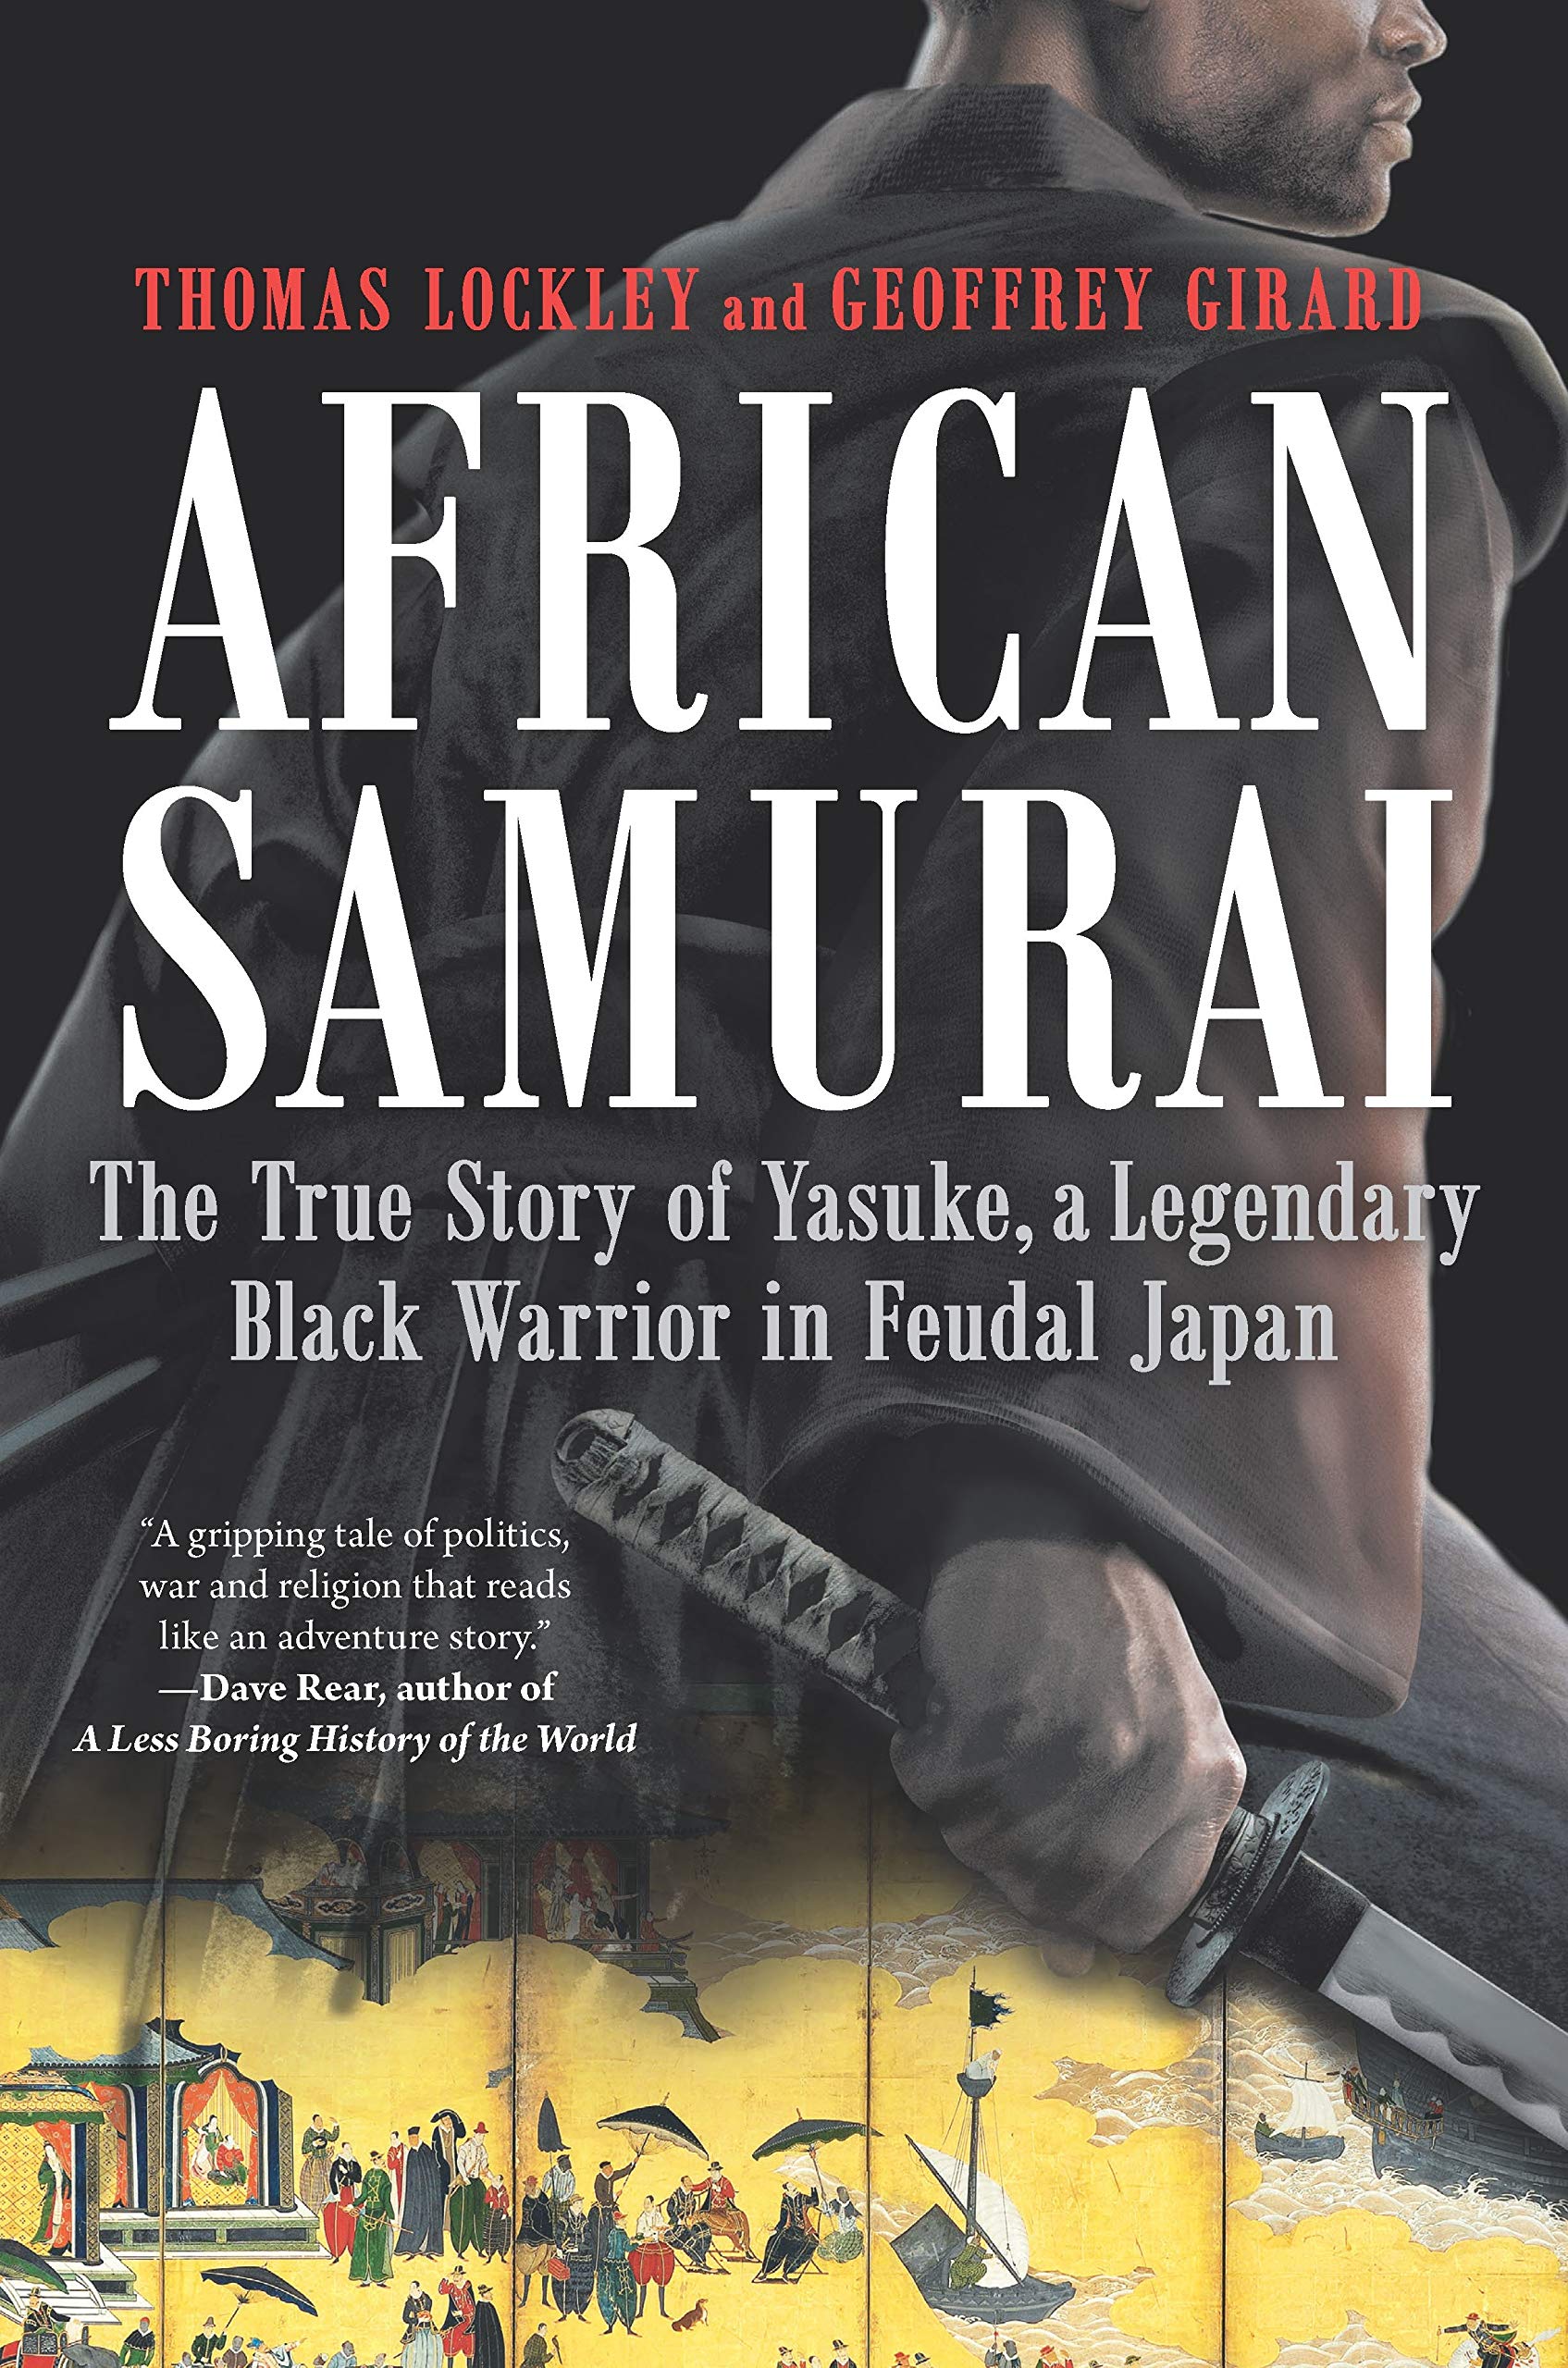 book_cover_african_samurai.jpg